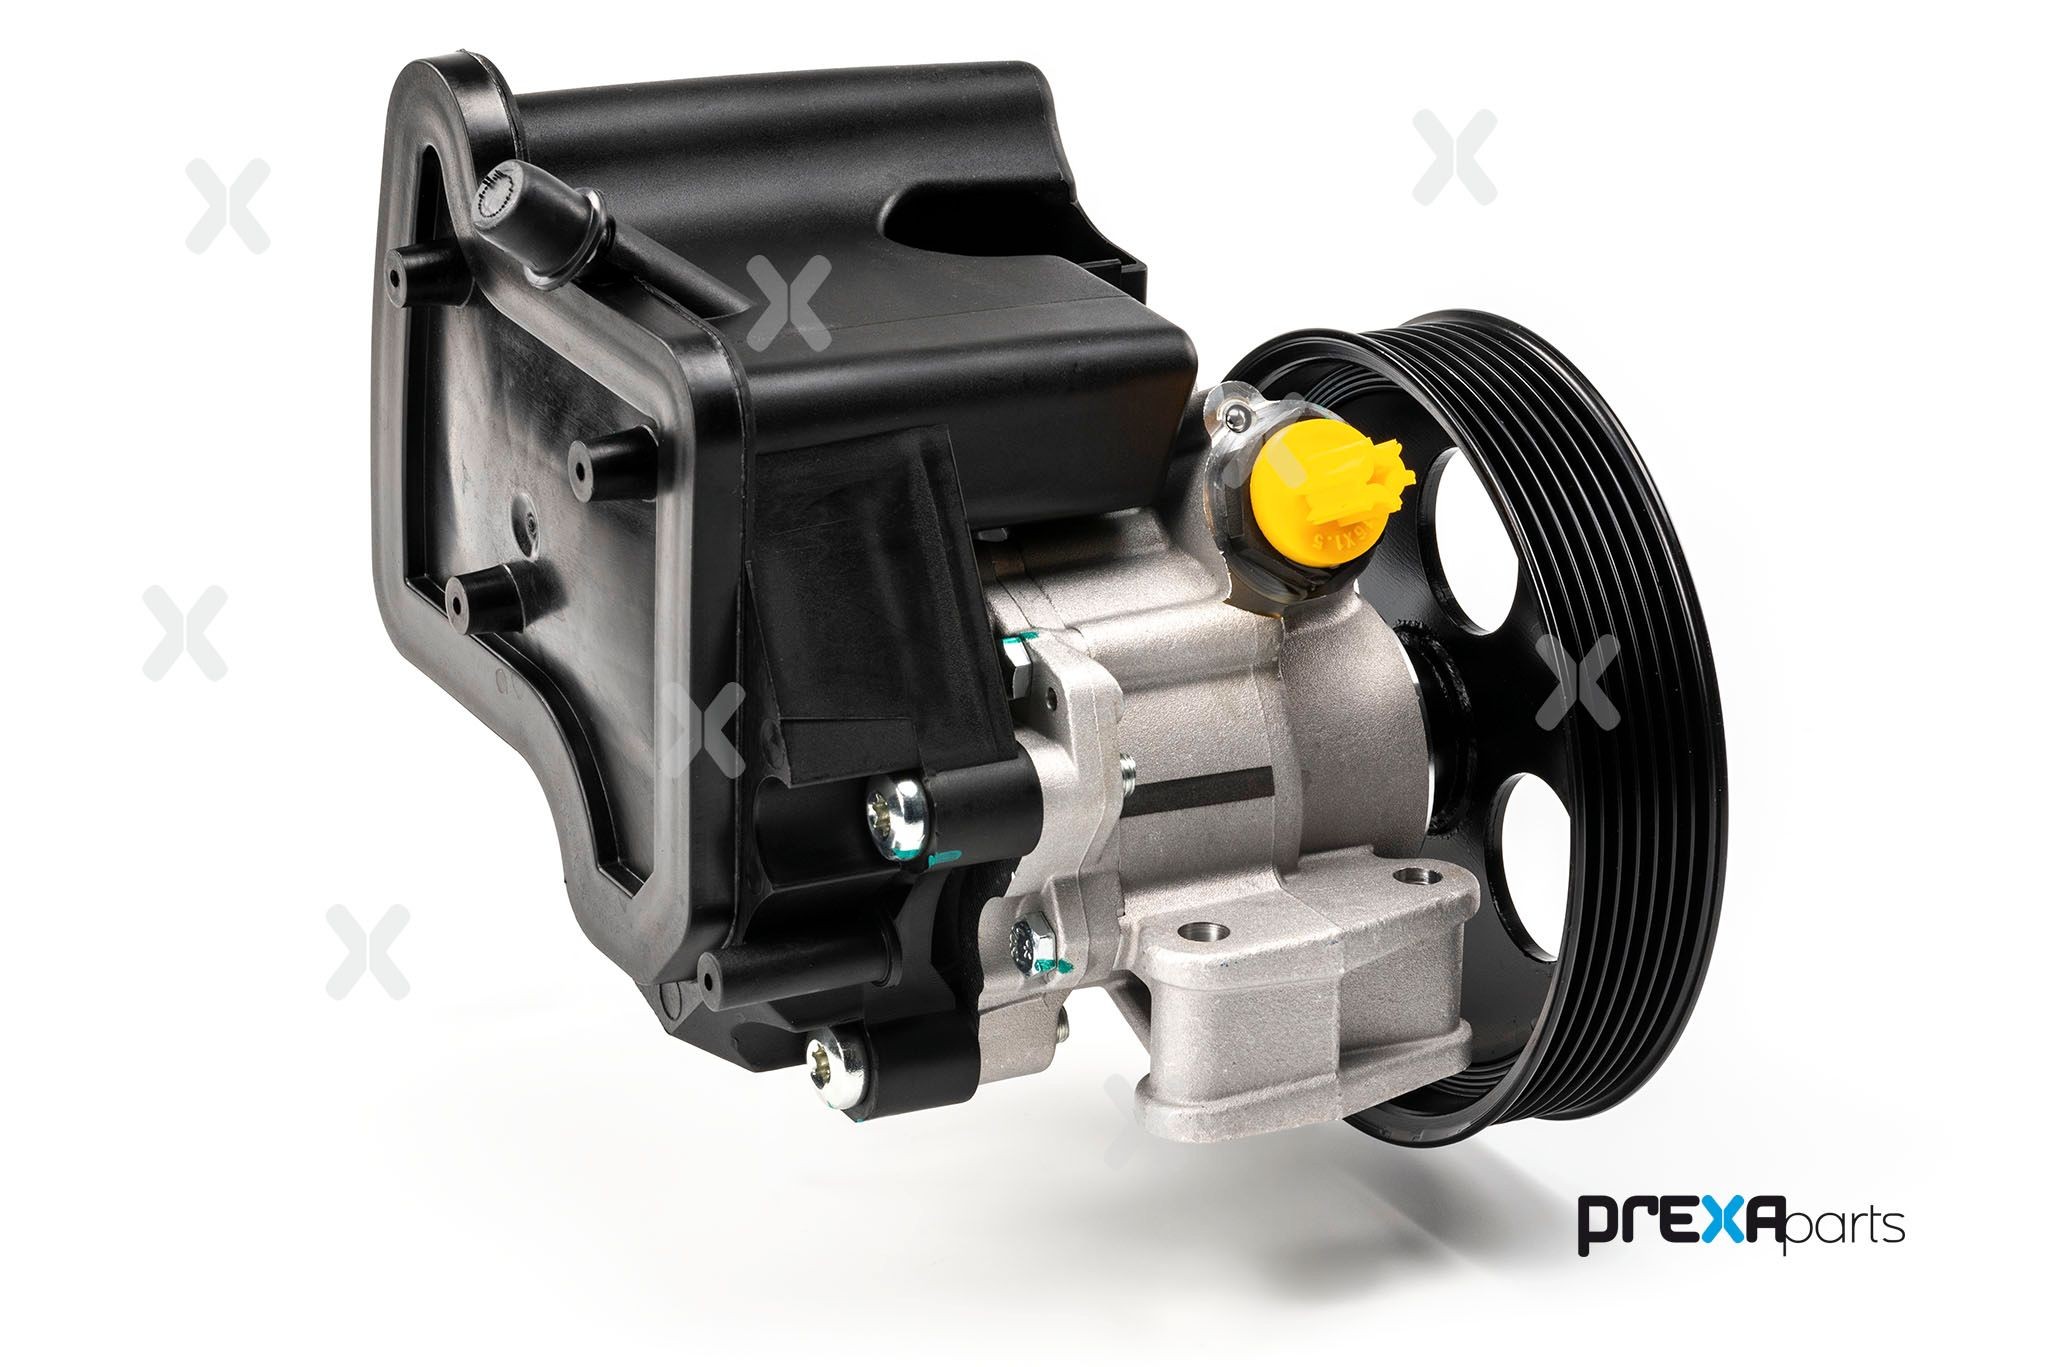 Original P150316 PREXAparts Power steering pump experience and price